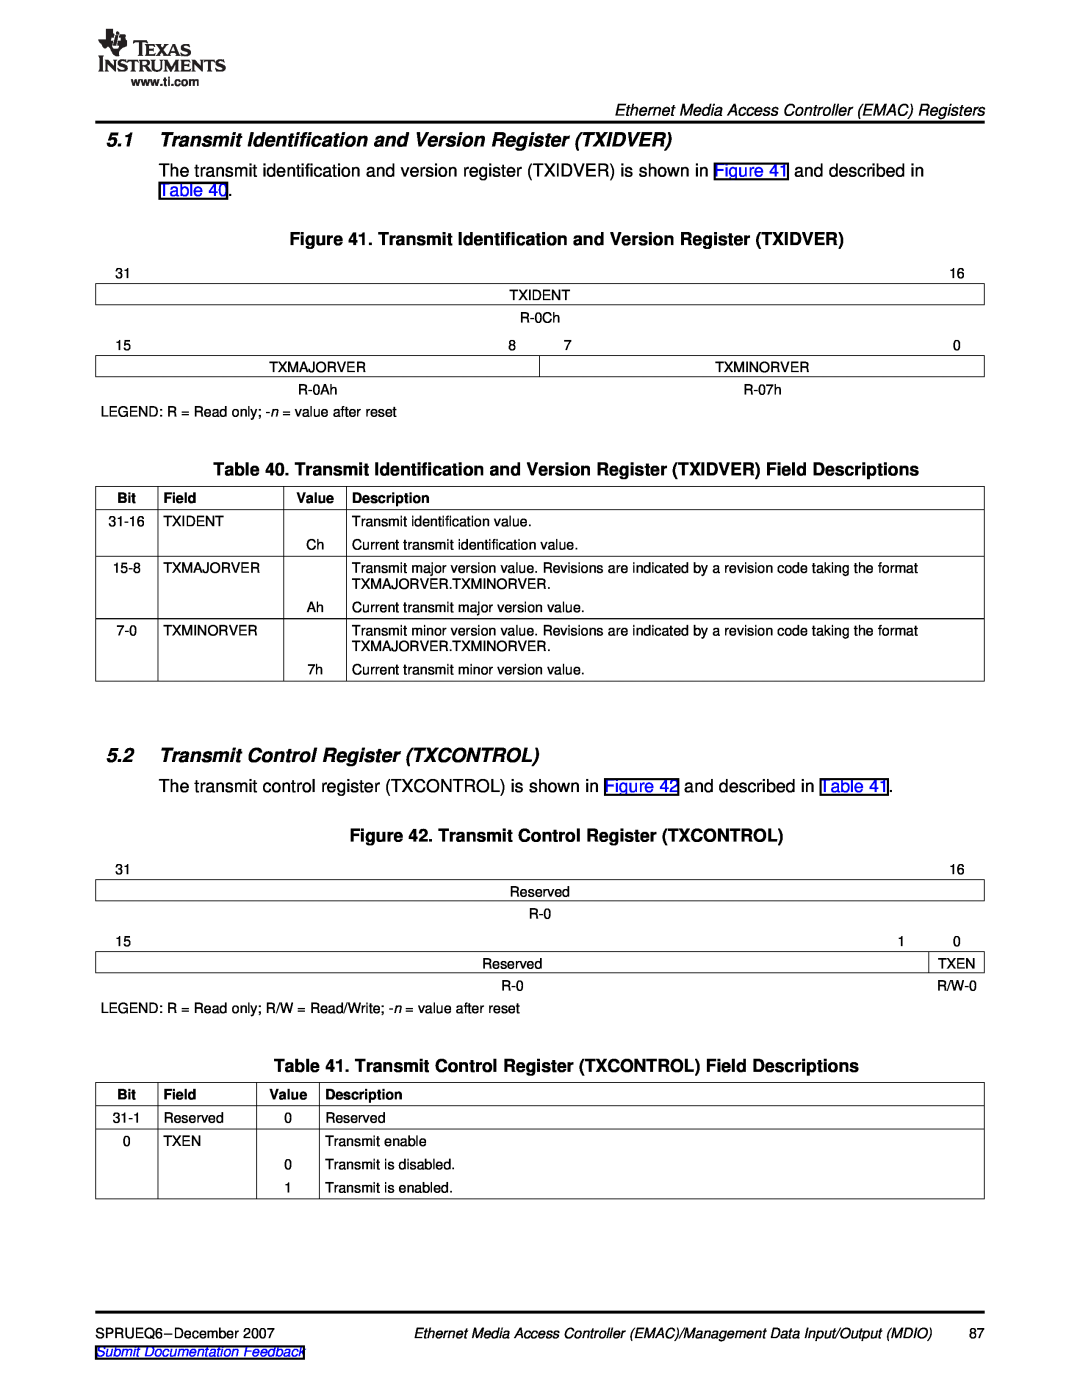 Texas Instruments TMS320DM646x Transmit Identification and Version Register TXIDVER, Transmit Control Register TXCONTROL 